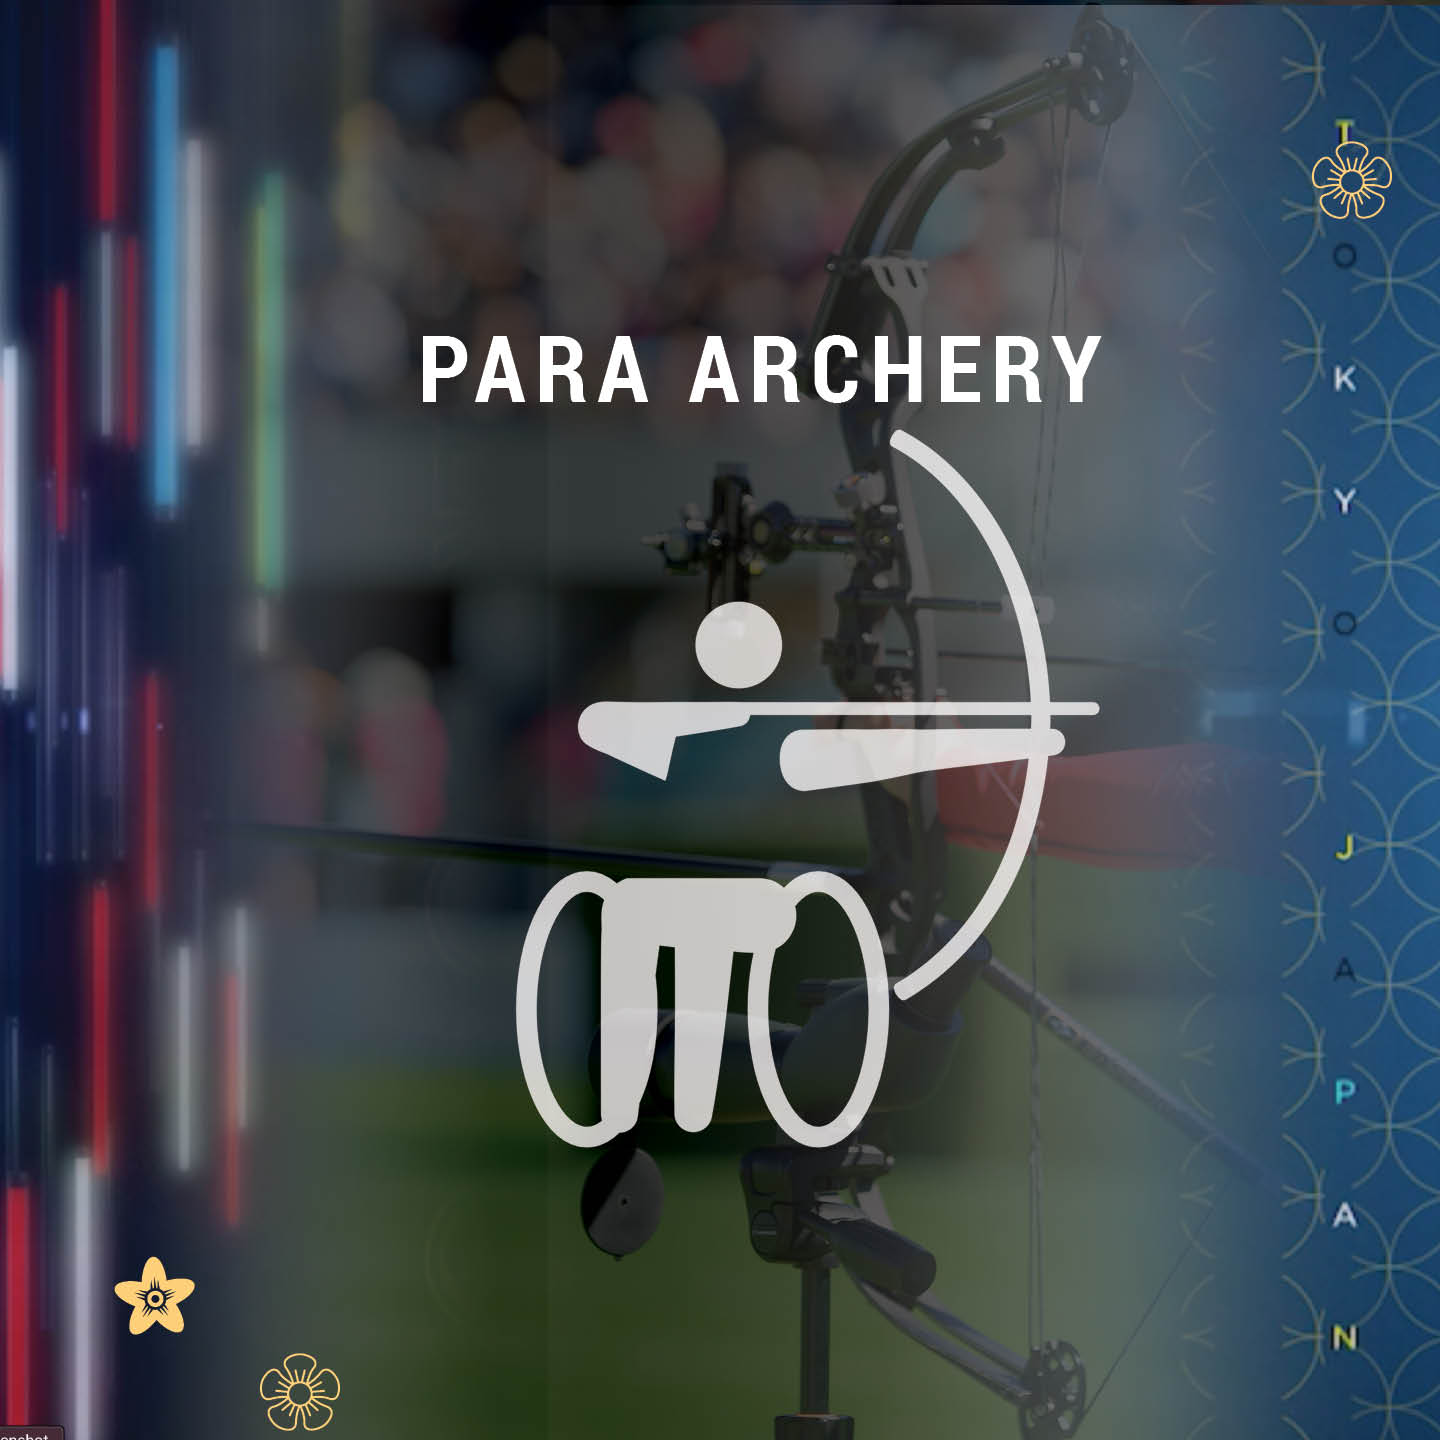 Para archery